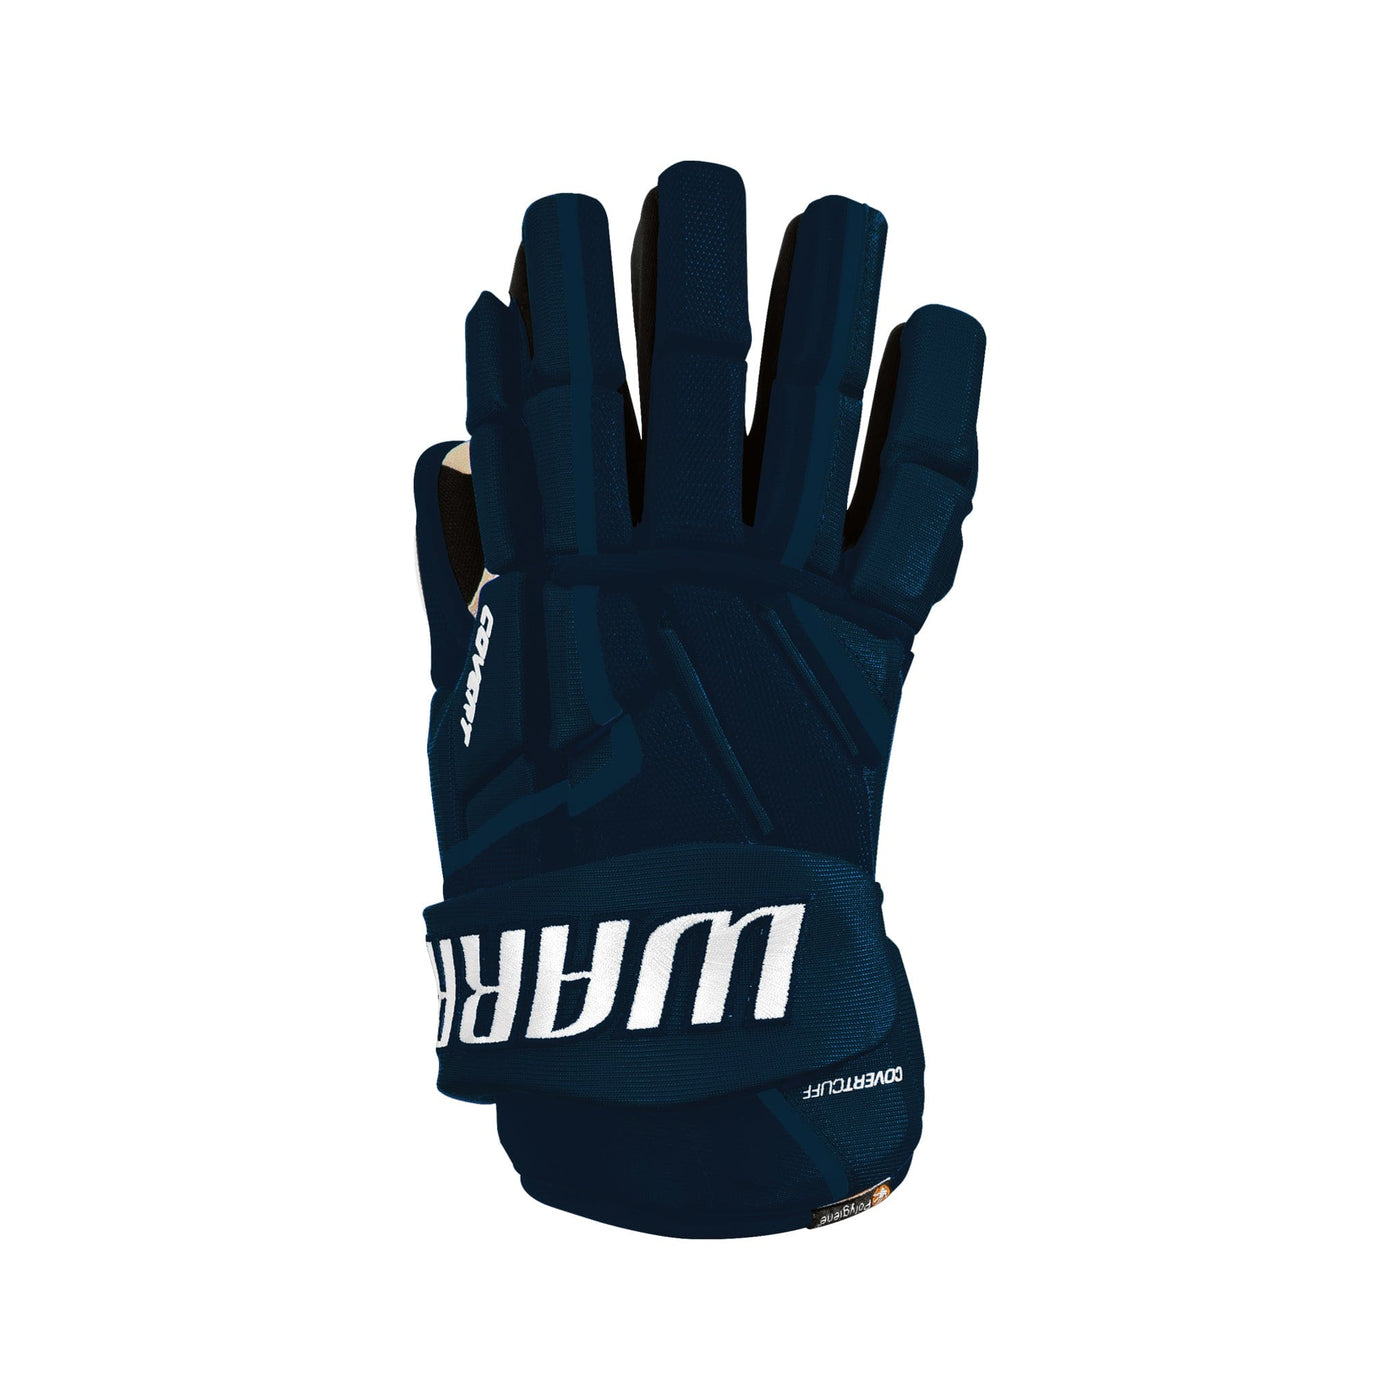 Warrior Covert QR5 20 Senior Hockey Gloves - The Hockey Shop Source For Sports